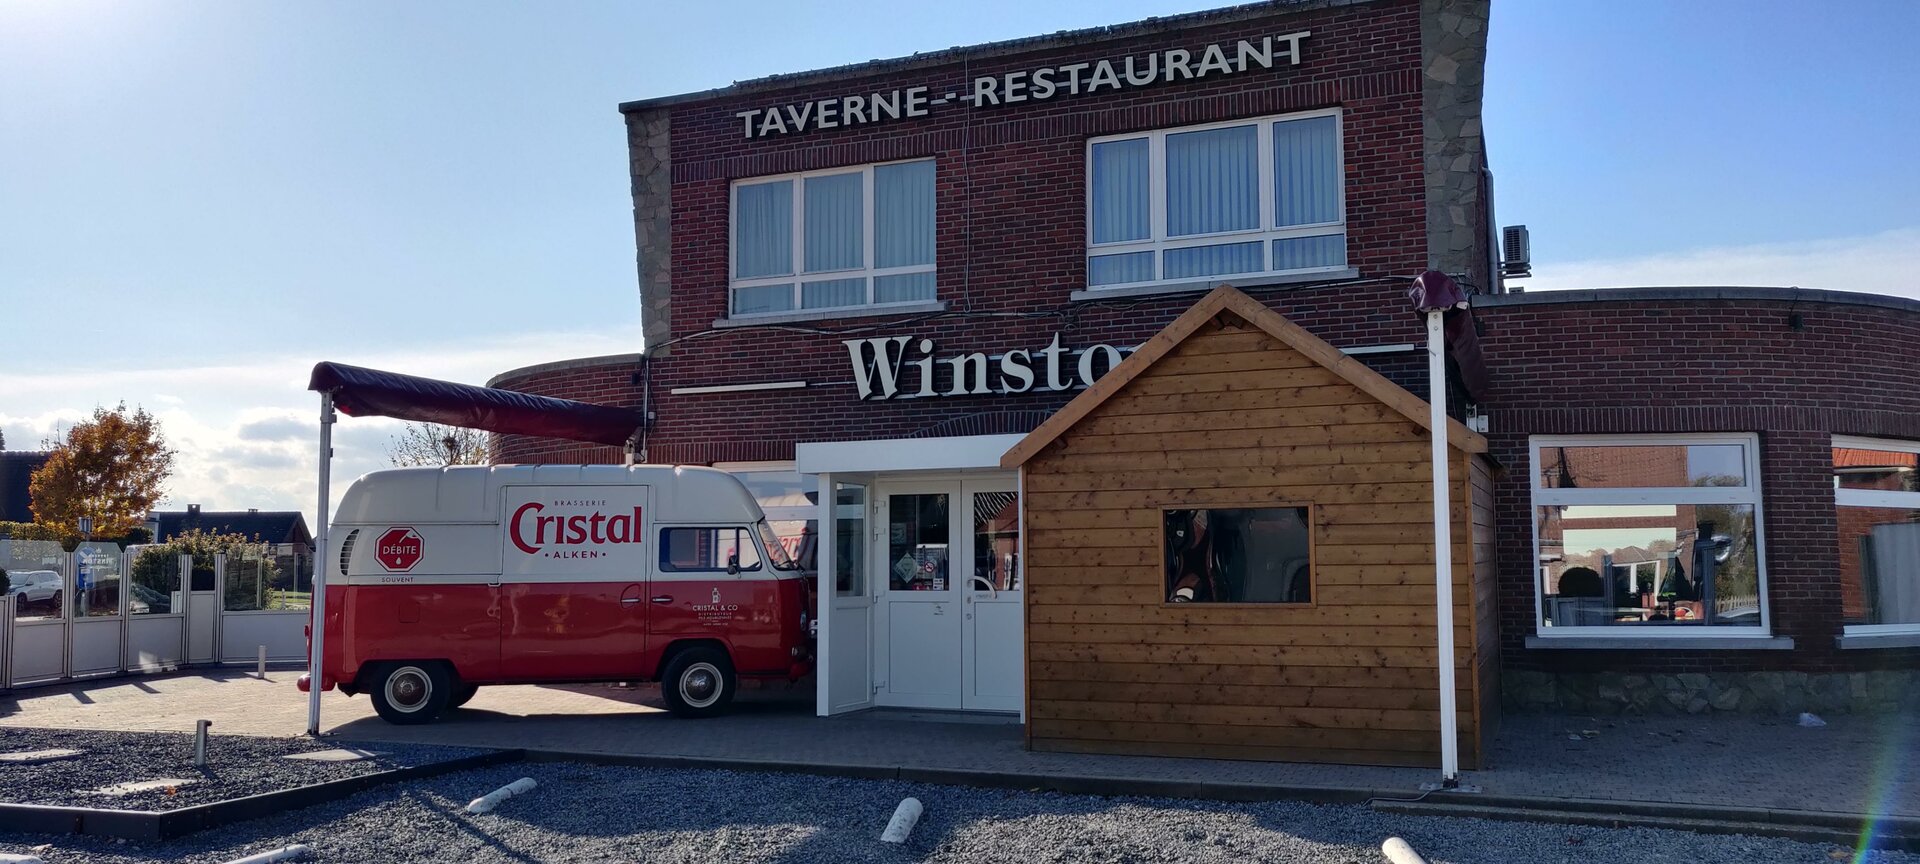 Taverne - Restaurant Winston - Cristal primeur